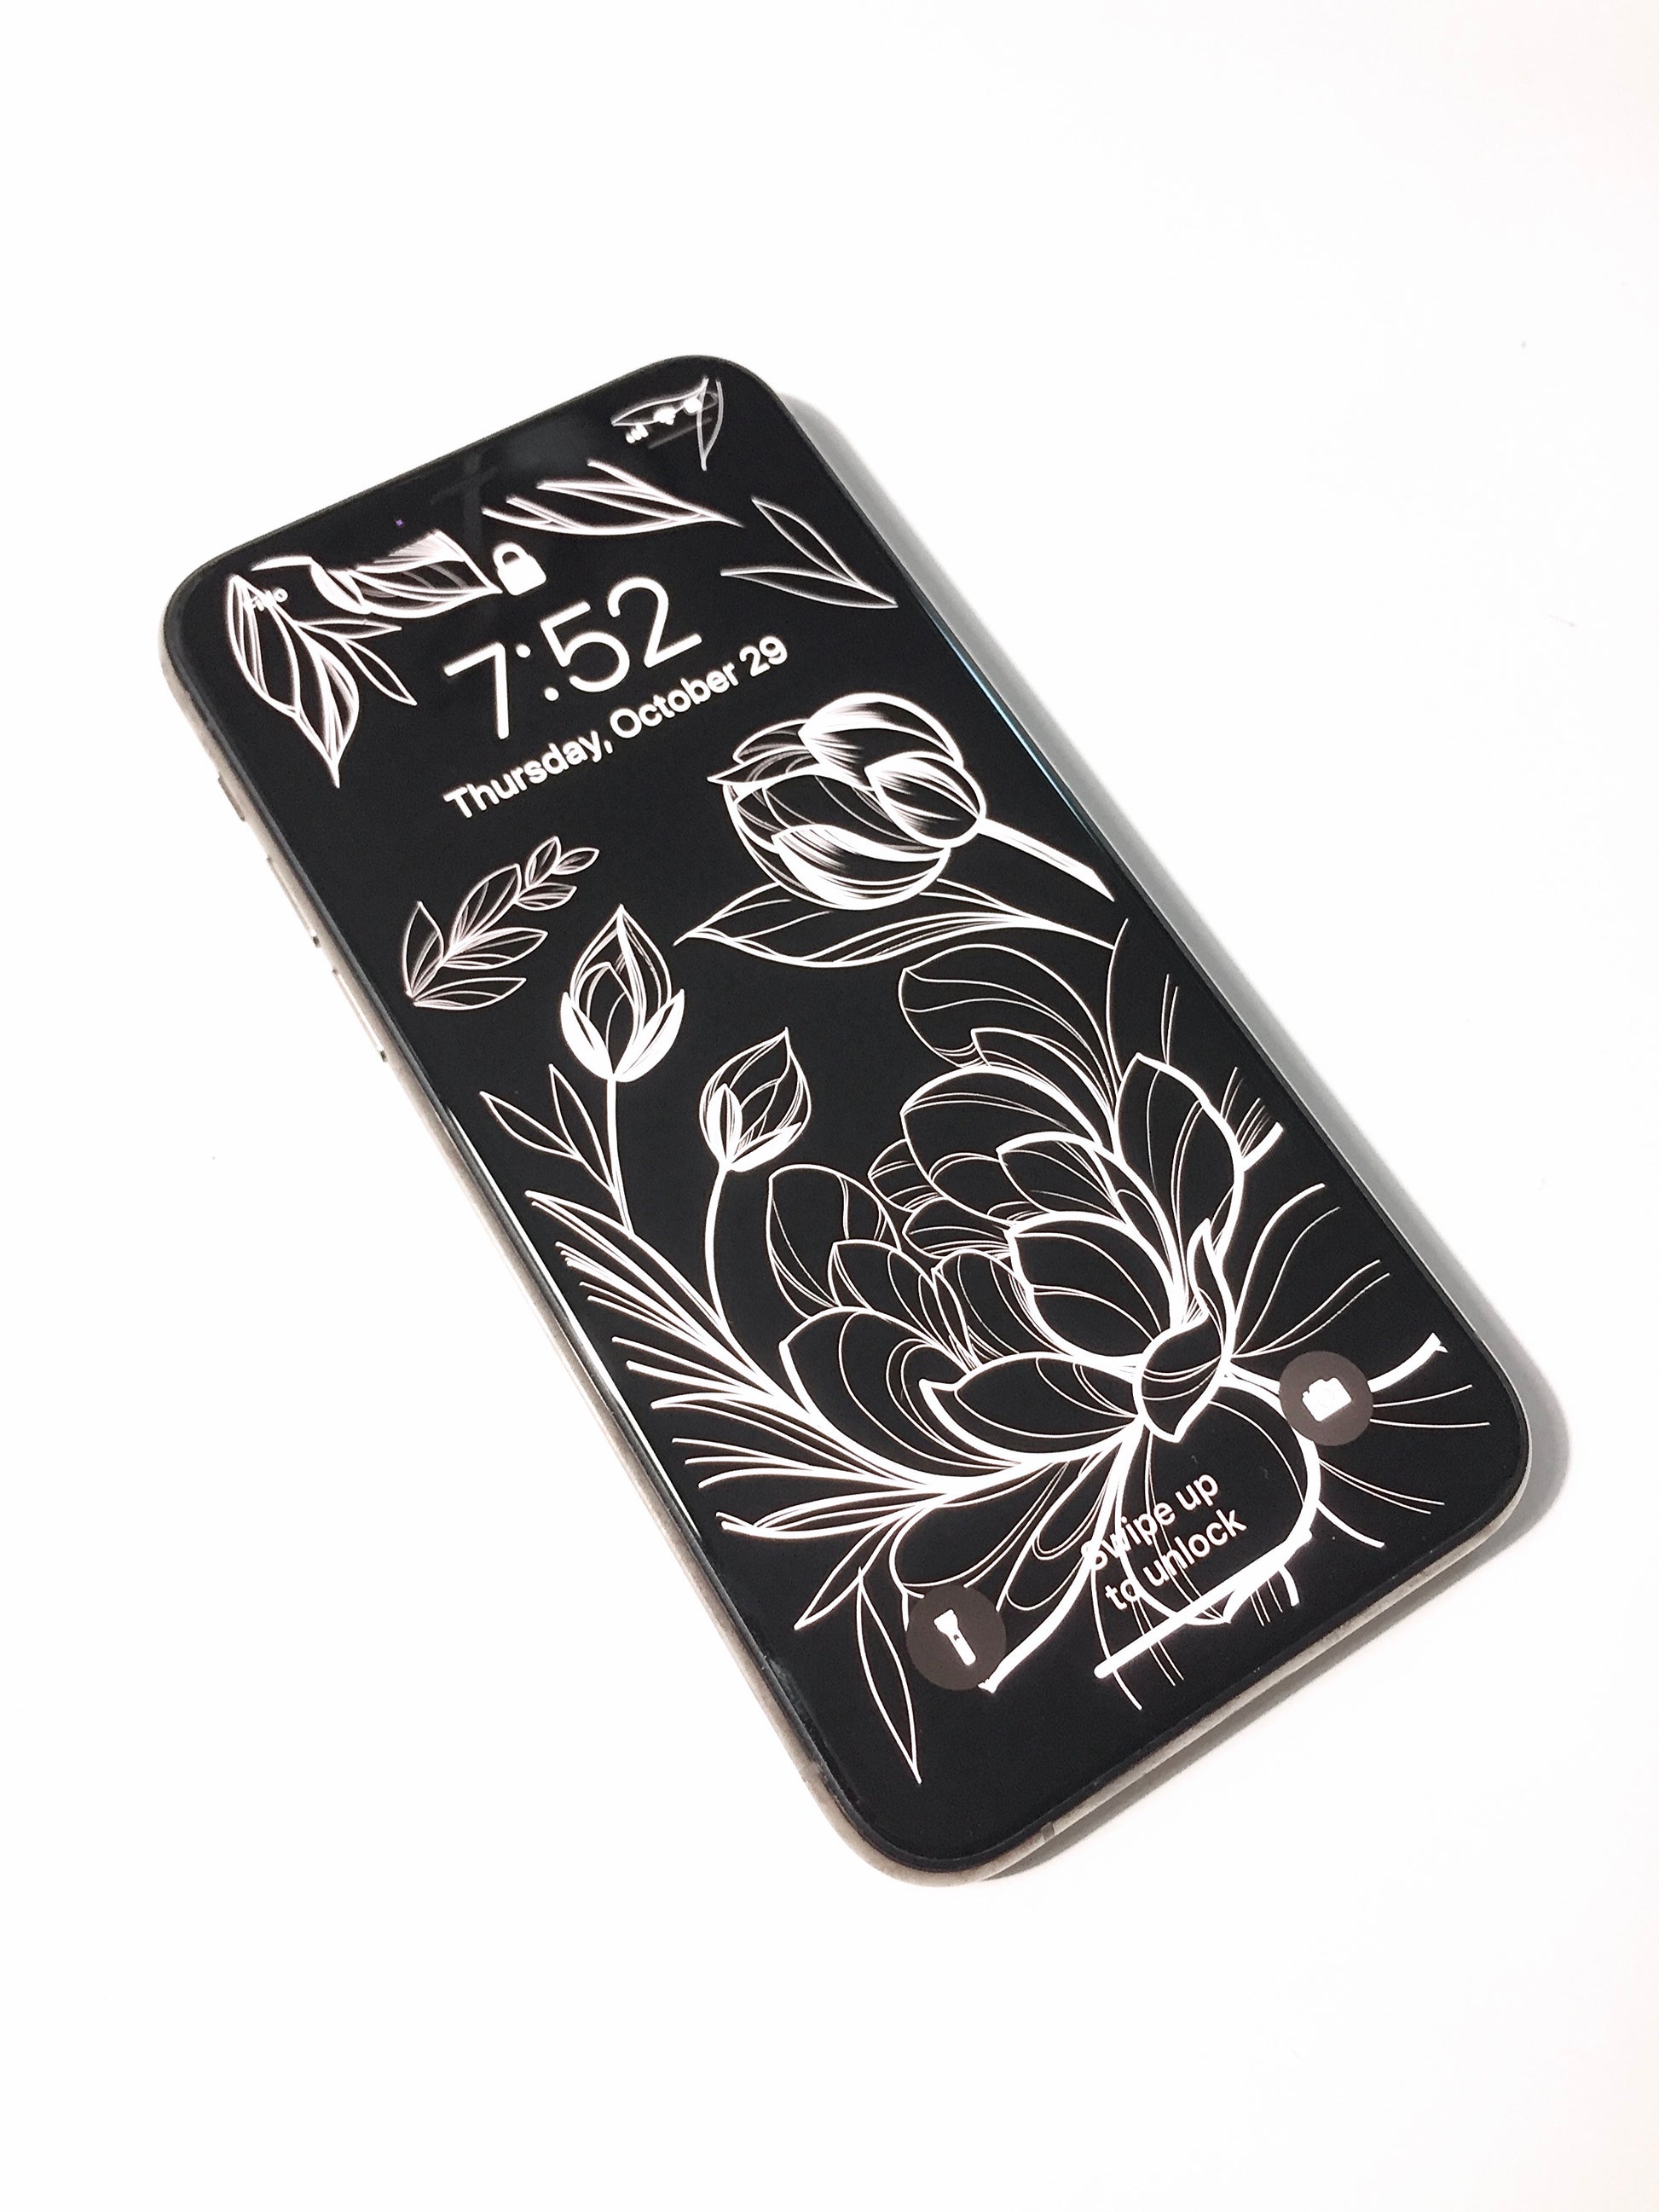 fineline lotus flower illustration phone background, white florals on black, by Lu Loram-Martin. Toronto tattoo artist and illustrator